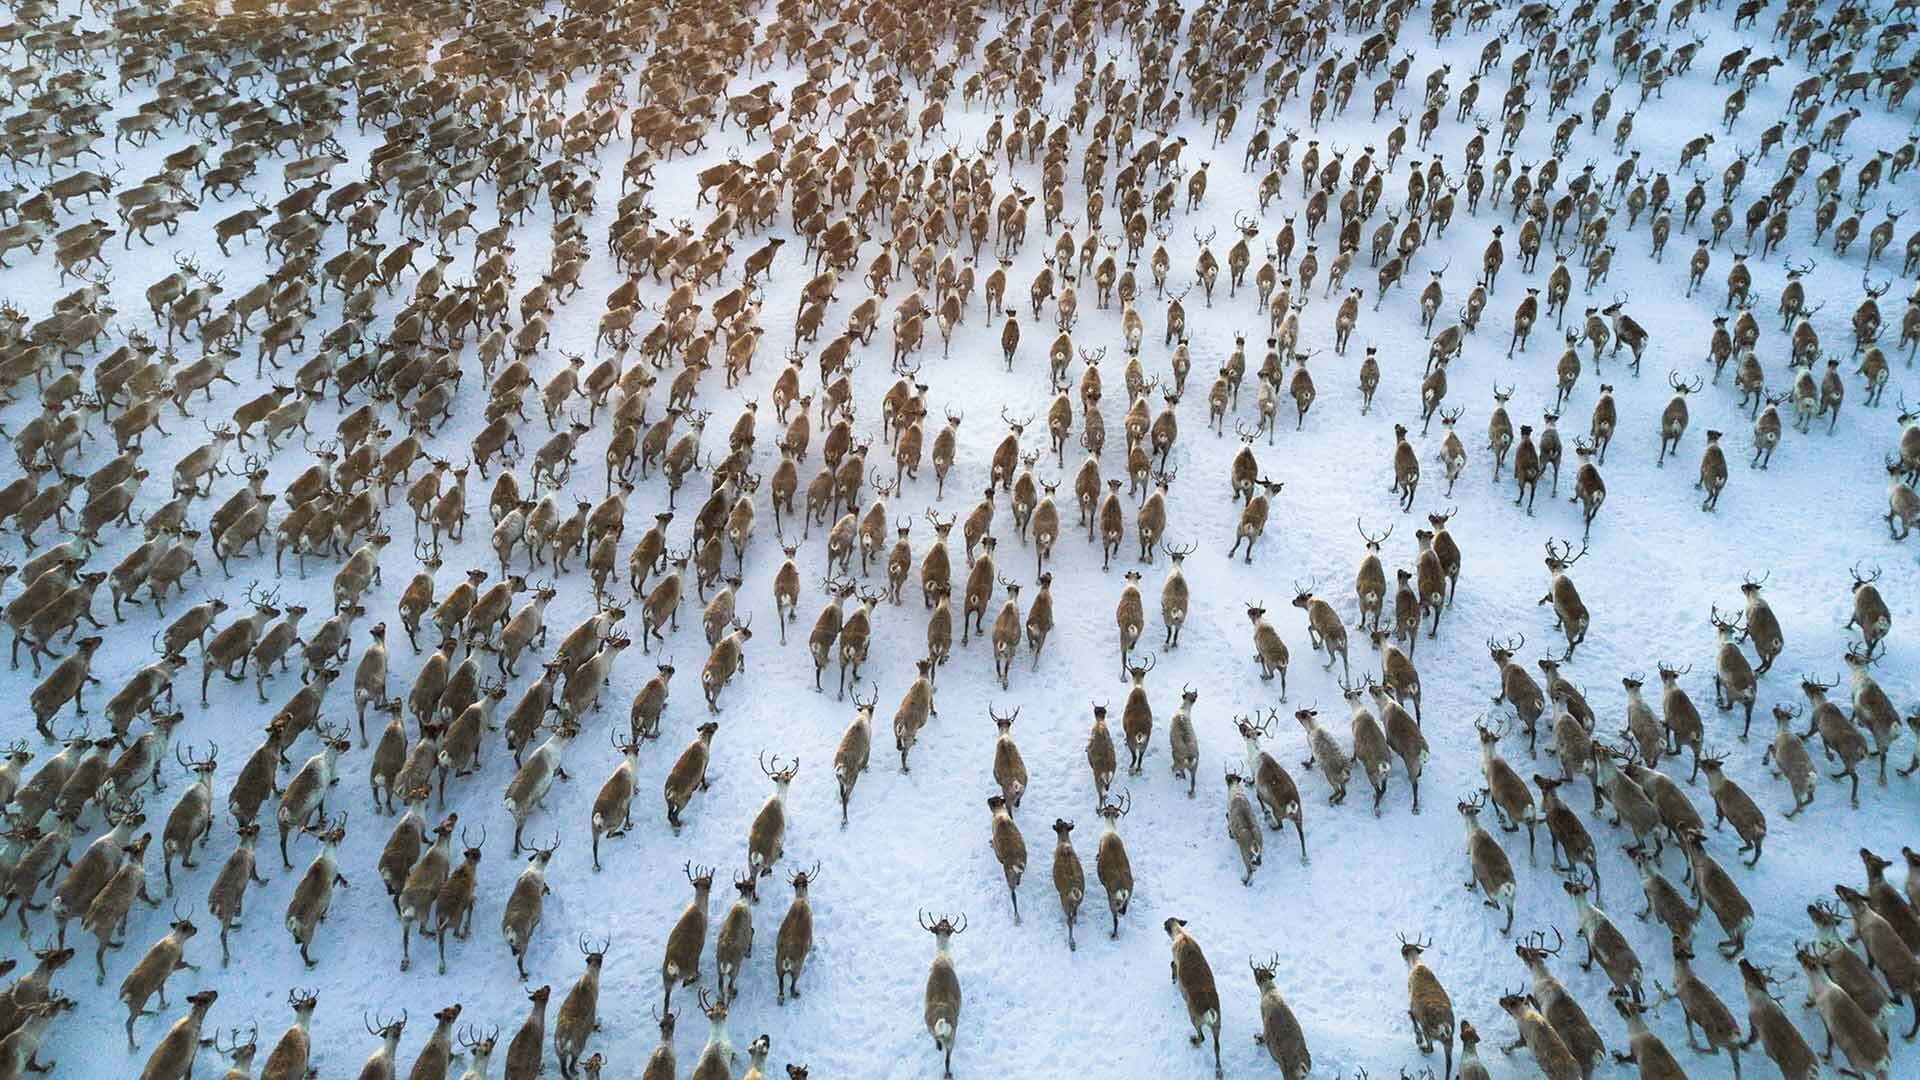 Herd of caribou